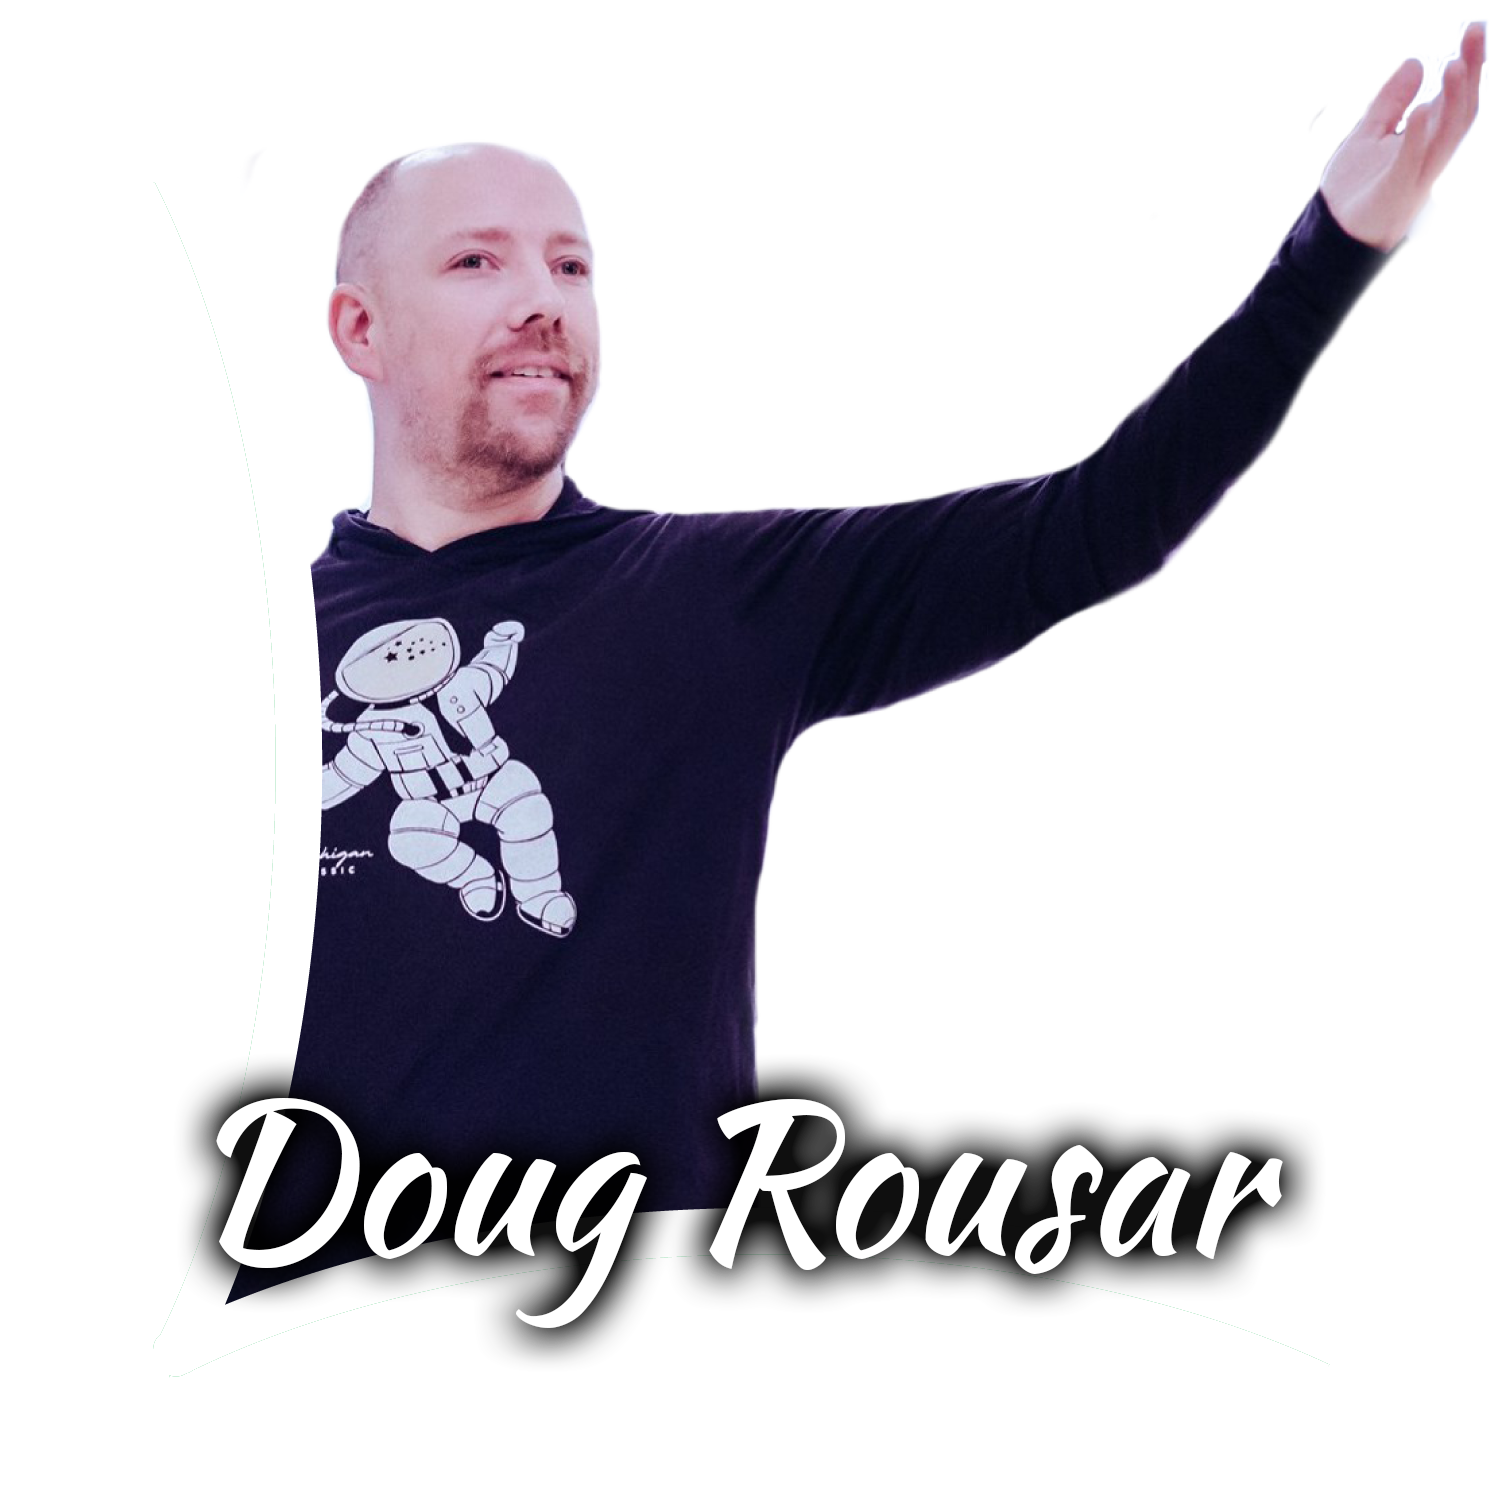 Doug_Rousar_name